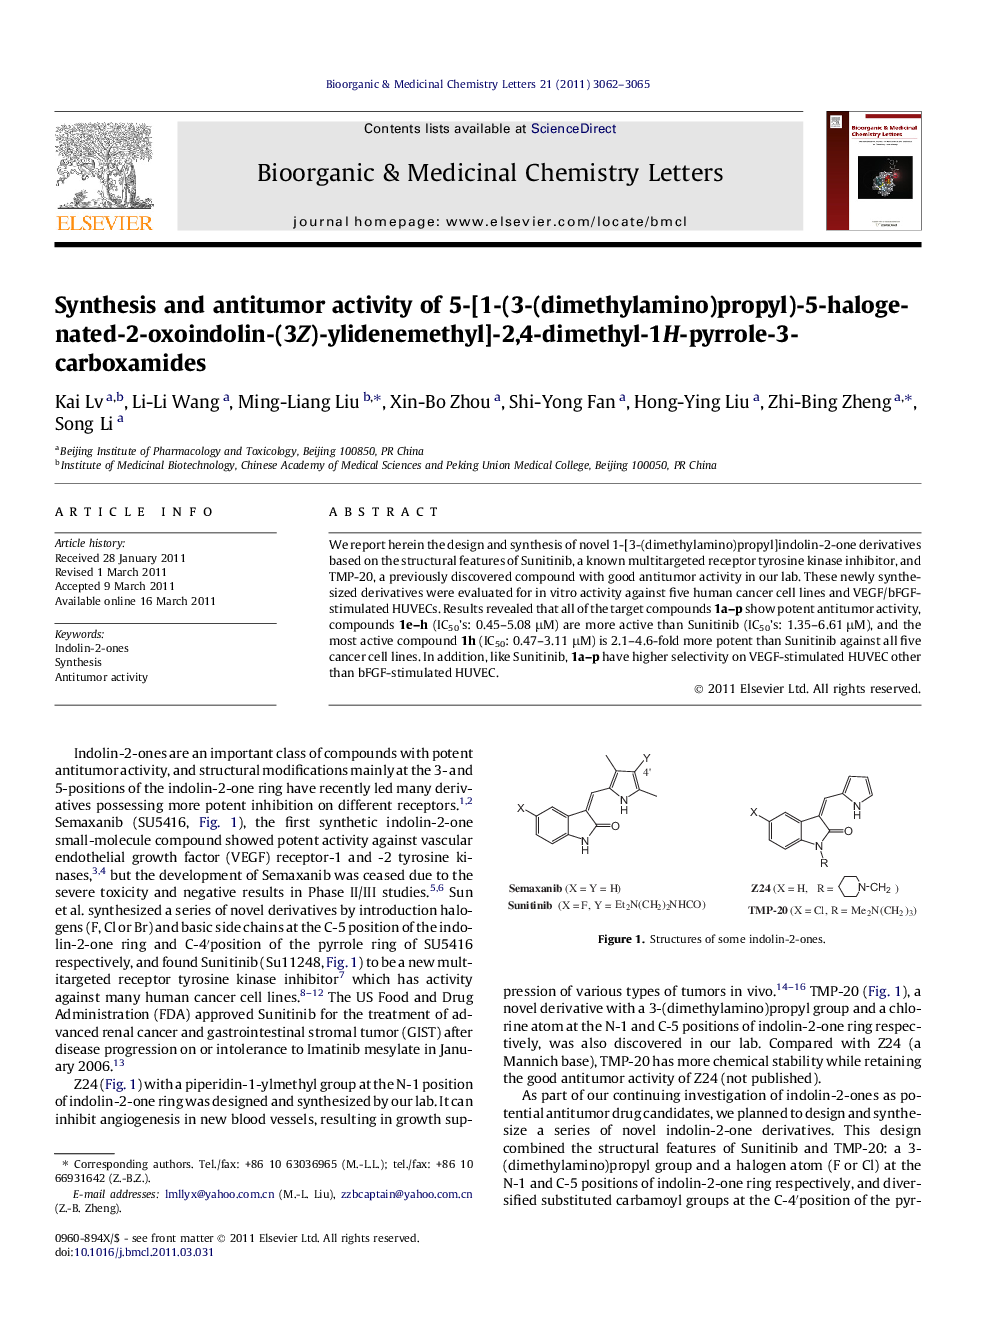 Synthesis and antitumor activity of 5-[1-(3-(dimethylamino)propyl)-5-halogenated-2-oxoindolin-(3Z)-ylidenemethyl]-2,4-dimethyl-1H-pyrrole-3-carboxamides